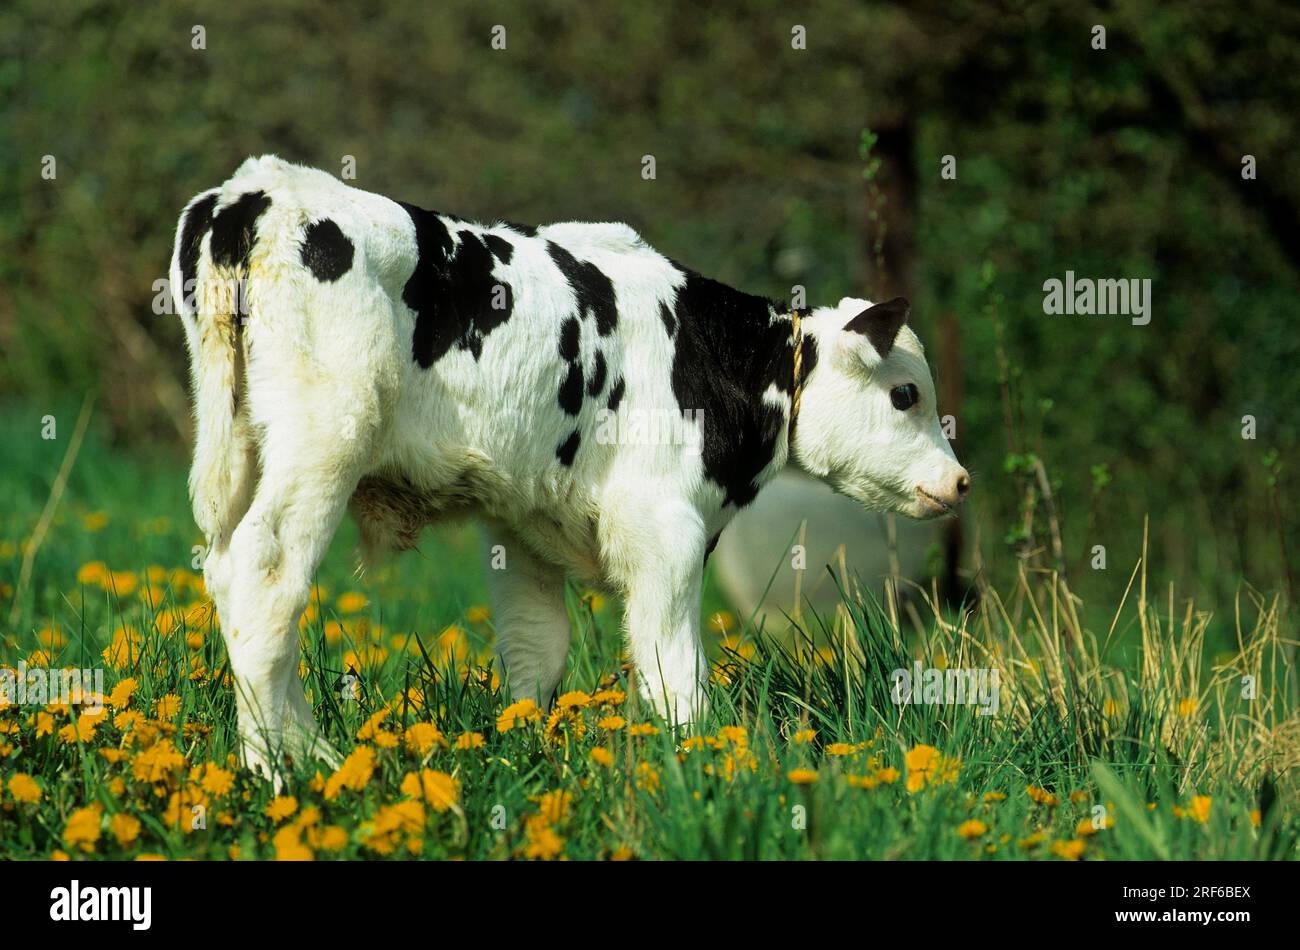 https://c8.alamy.com/comp/2RF6BEX/black-cattle-bull-calf-2RF6BEX.jpg